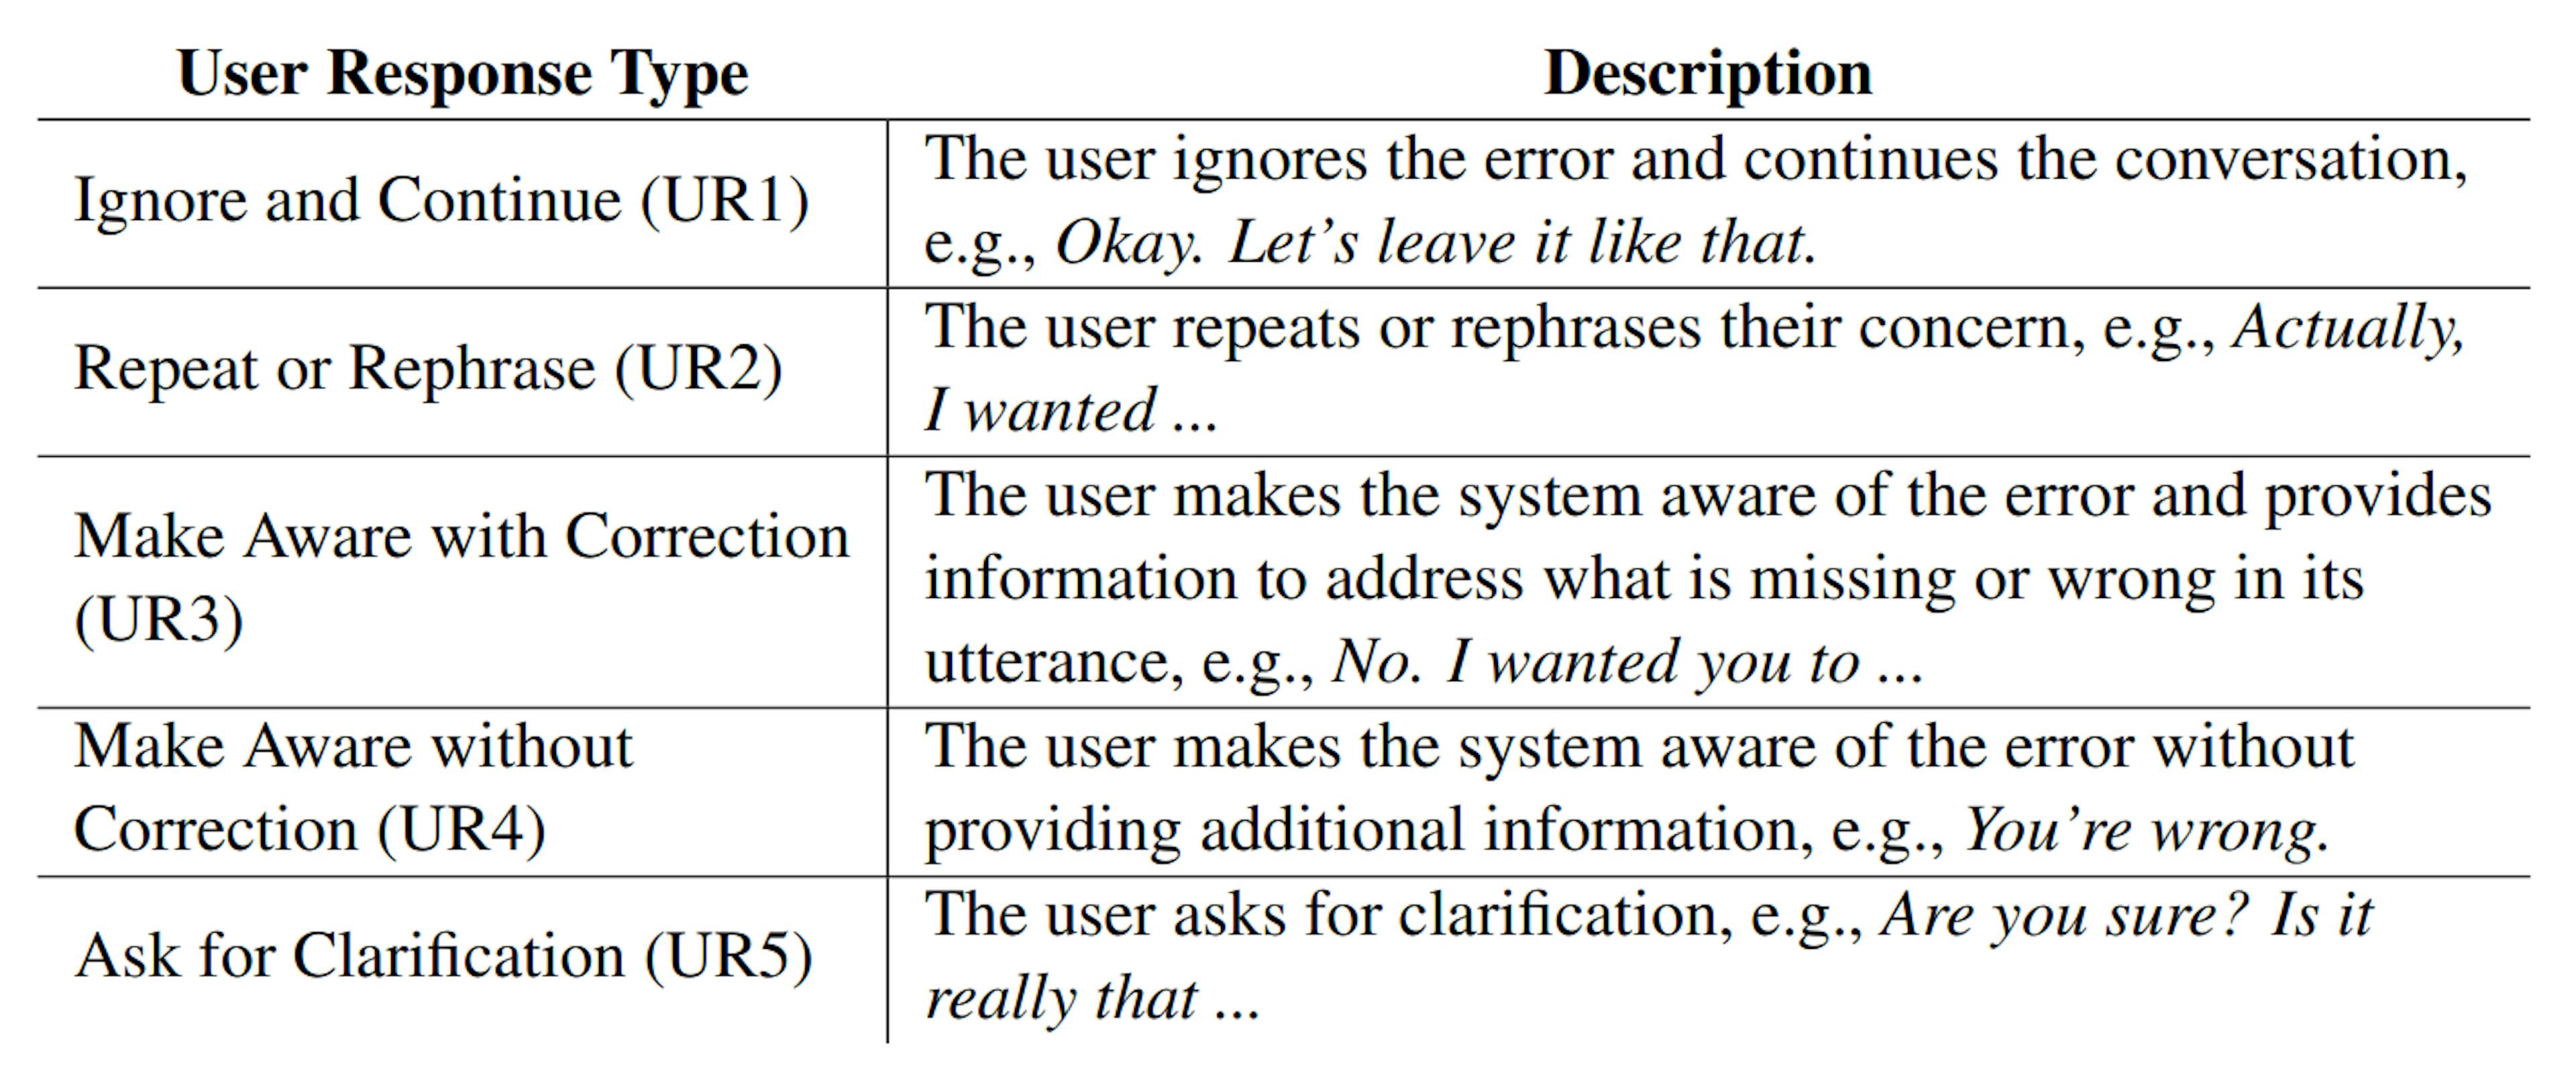 Table 5: User Response Type Taxonomy.